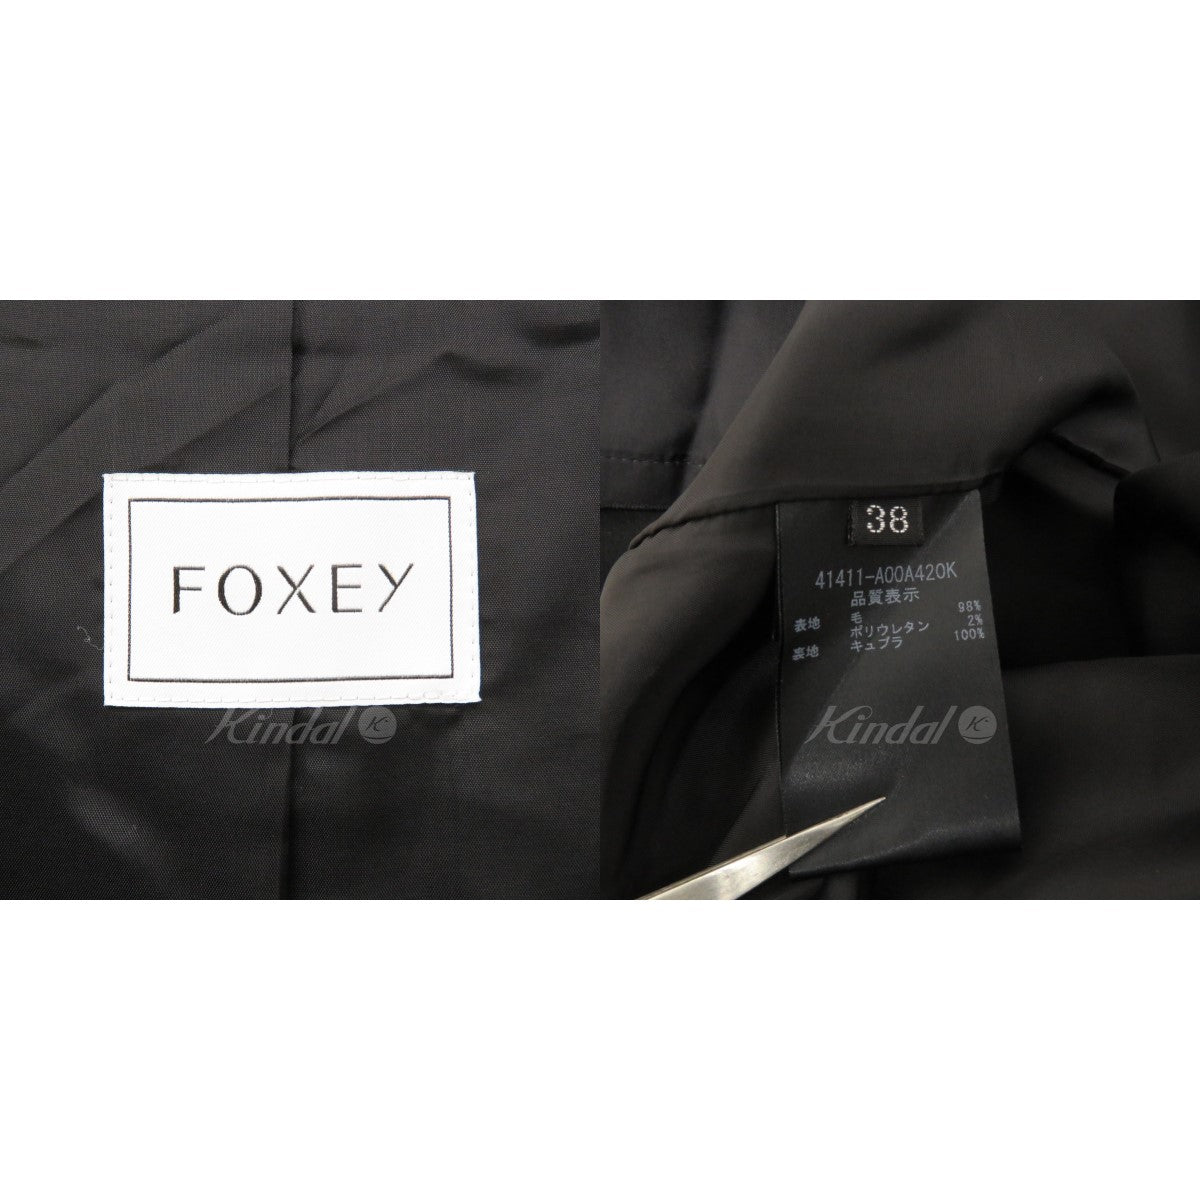 FOXEY(フォクシー) Lady Tailored ノースリーブワンピース ドレス 41411